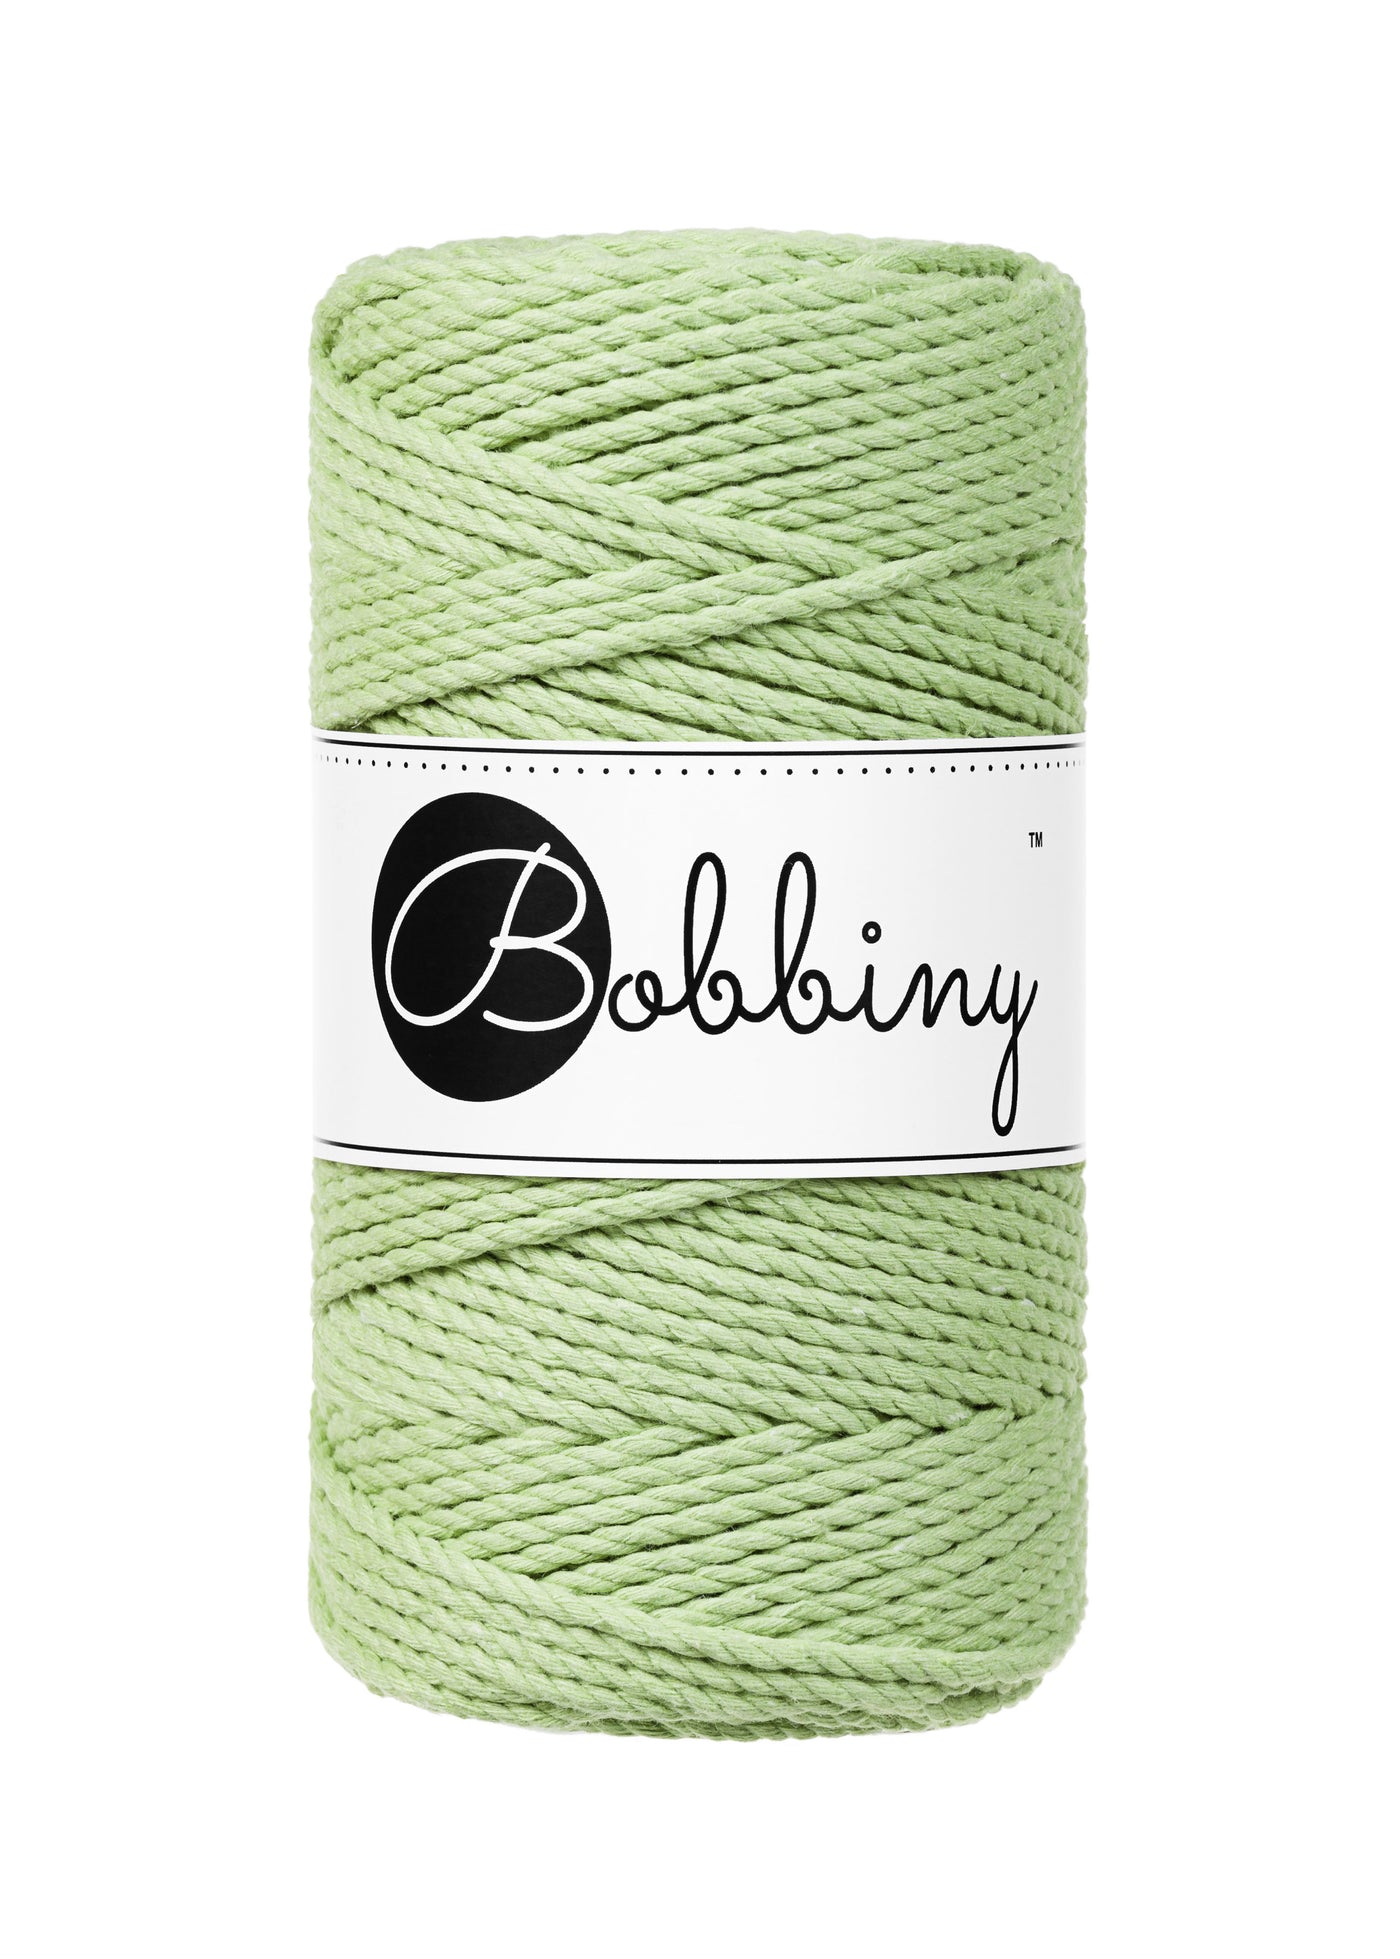 Bobbiny macrame rope 3ply 3mm in green matcha shade 